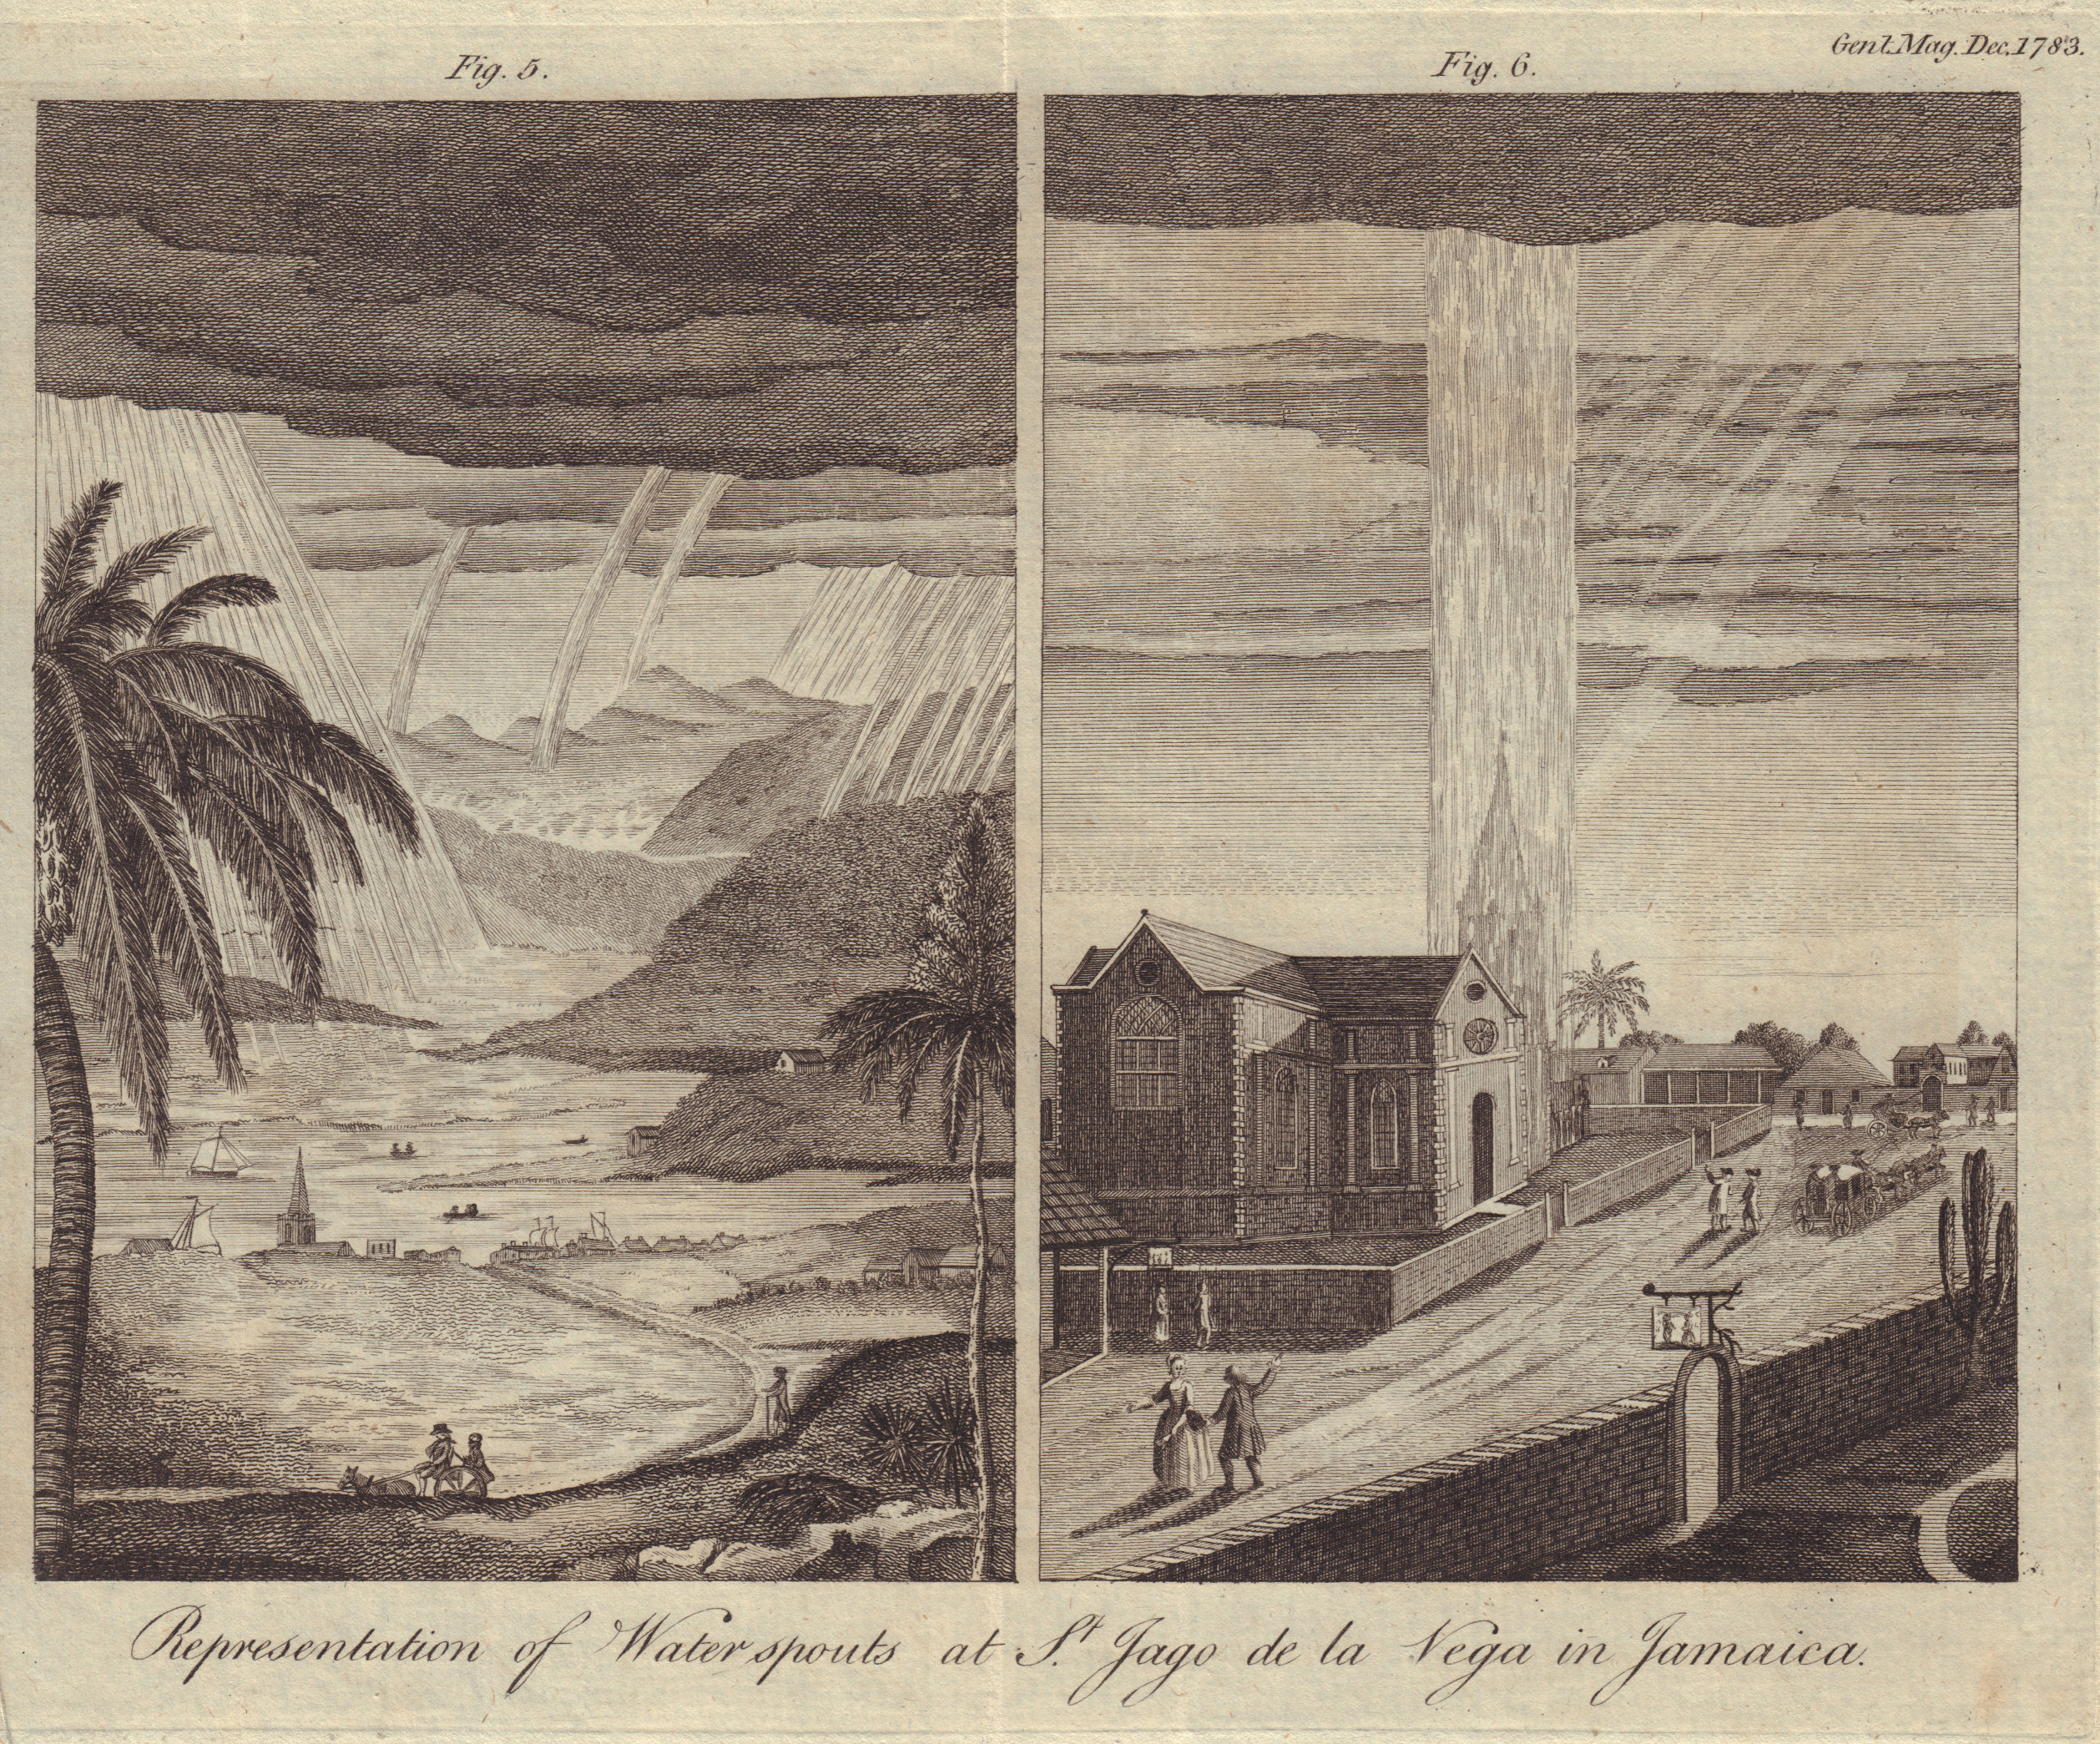 Waterspouts at St. Jago de la Vega in Jamaica. Spanish Town. GENTS MAG 1783